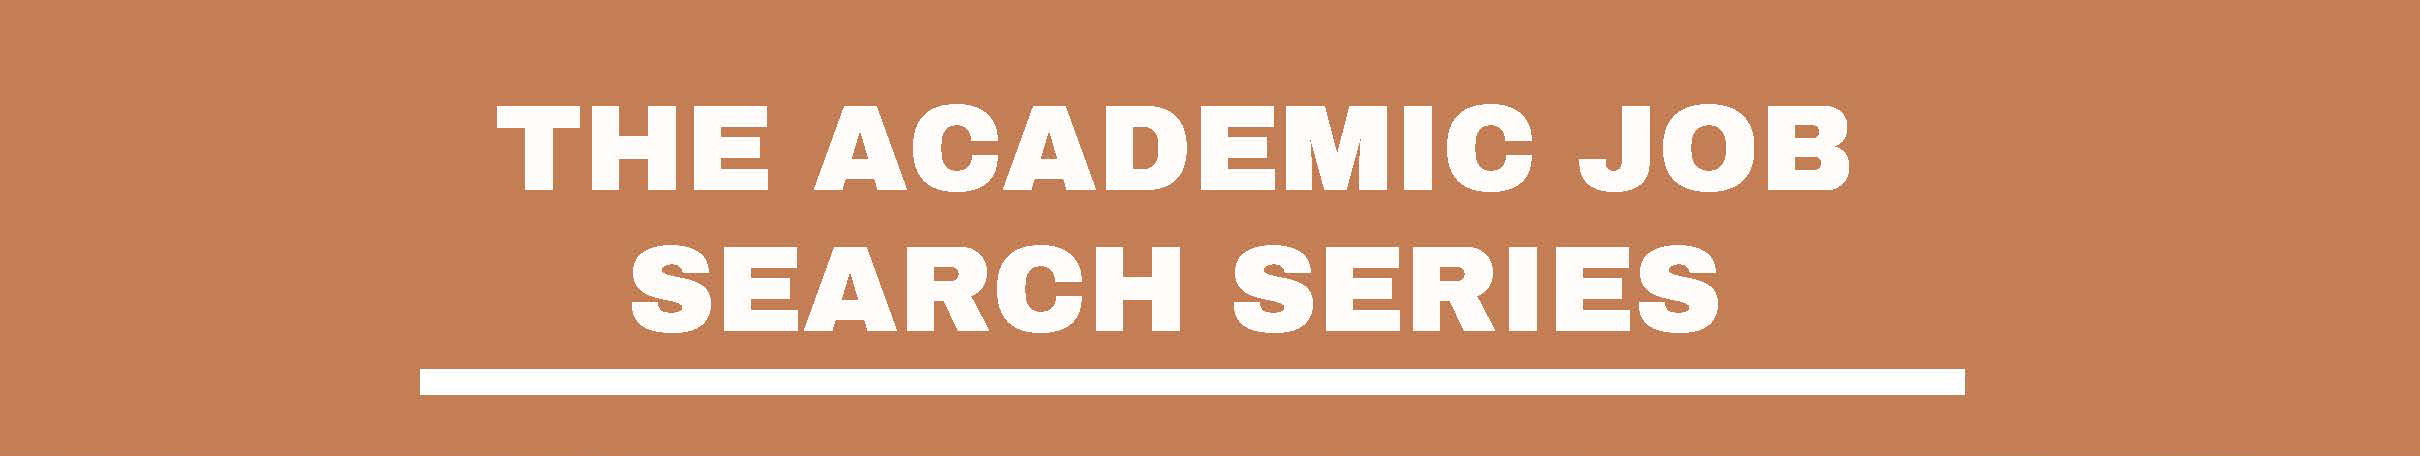 academic-job-search-series-2017_banner.jpg